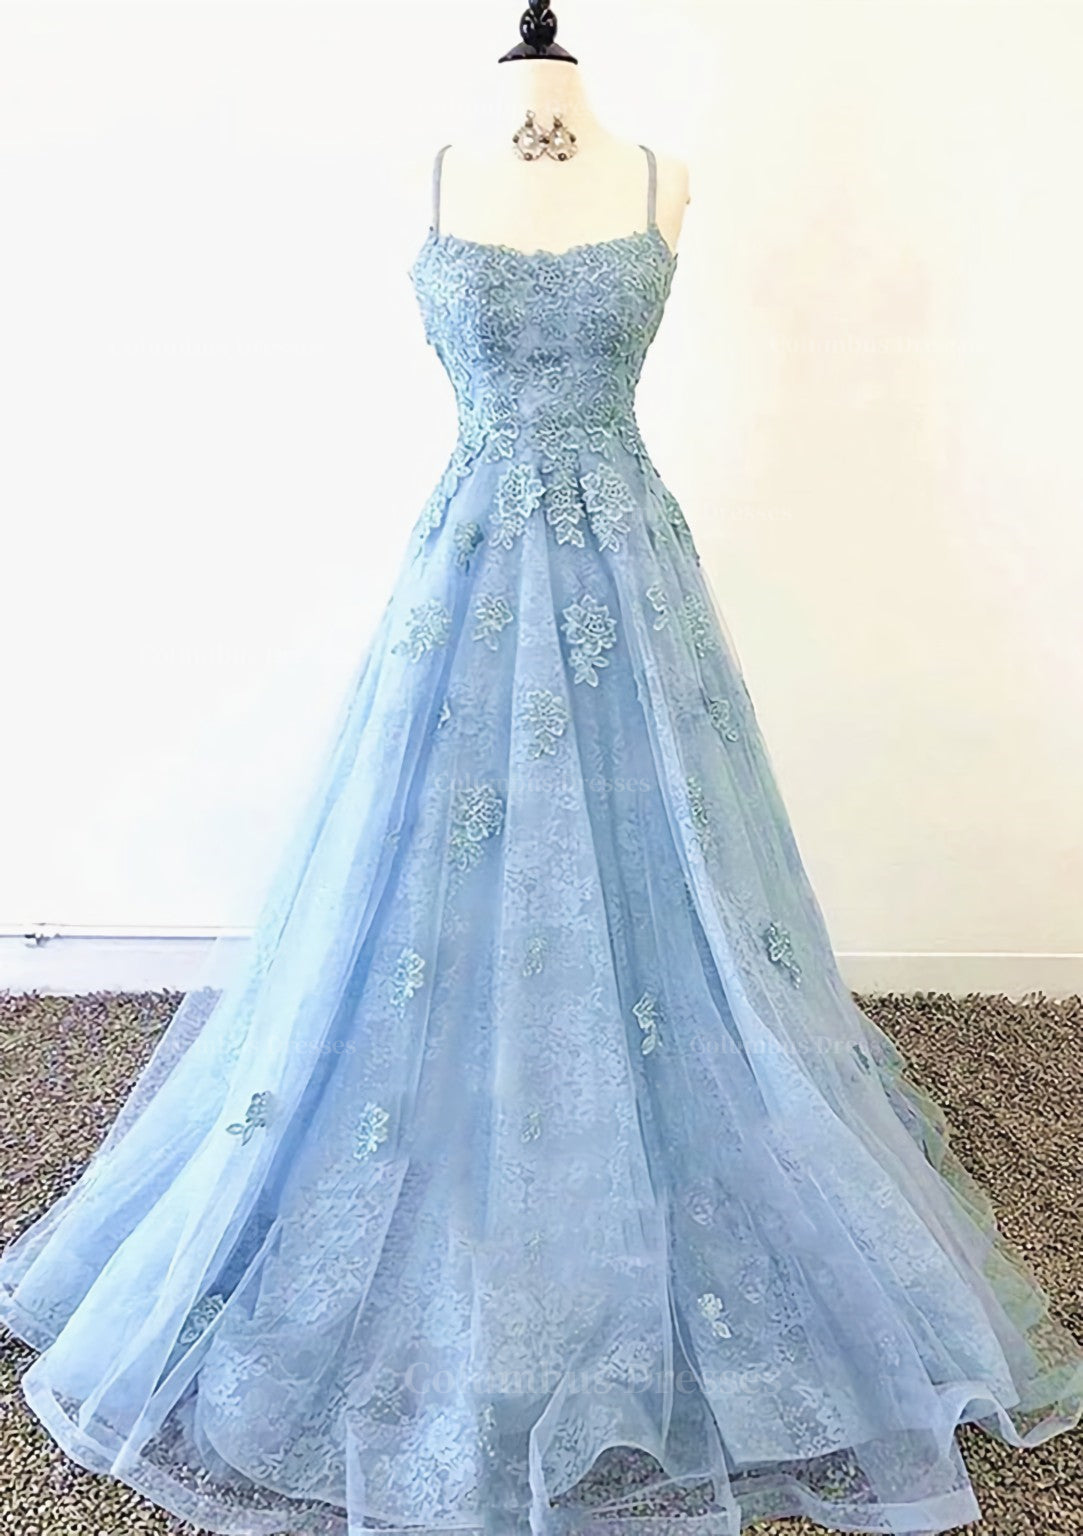 Dress Casual, A-line Bateau Court Train Lace Prom Dress With Appliqued